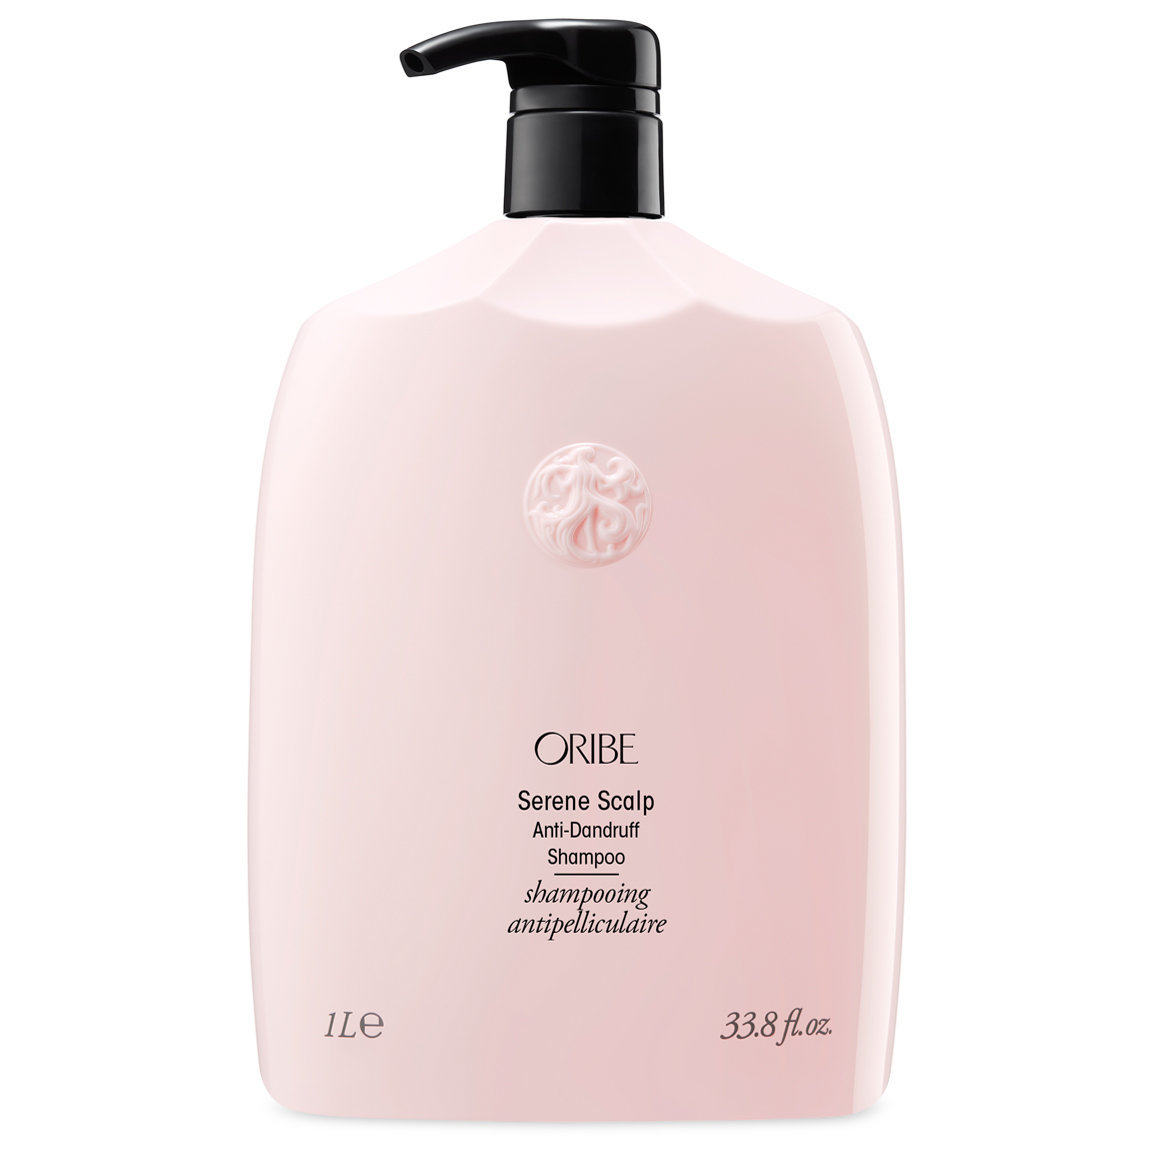 Oribe Serene Scalp Anti-Dandruff Shampoo 1 L alternative view 1 - product swatch.